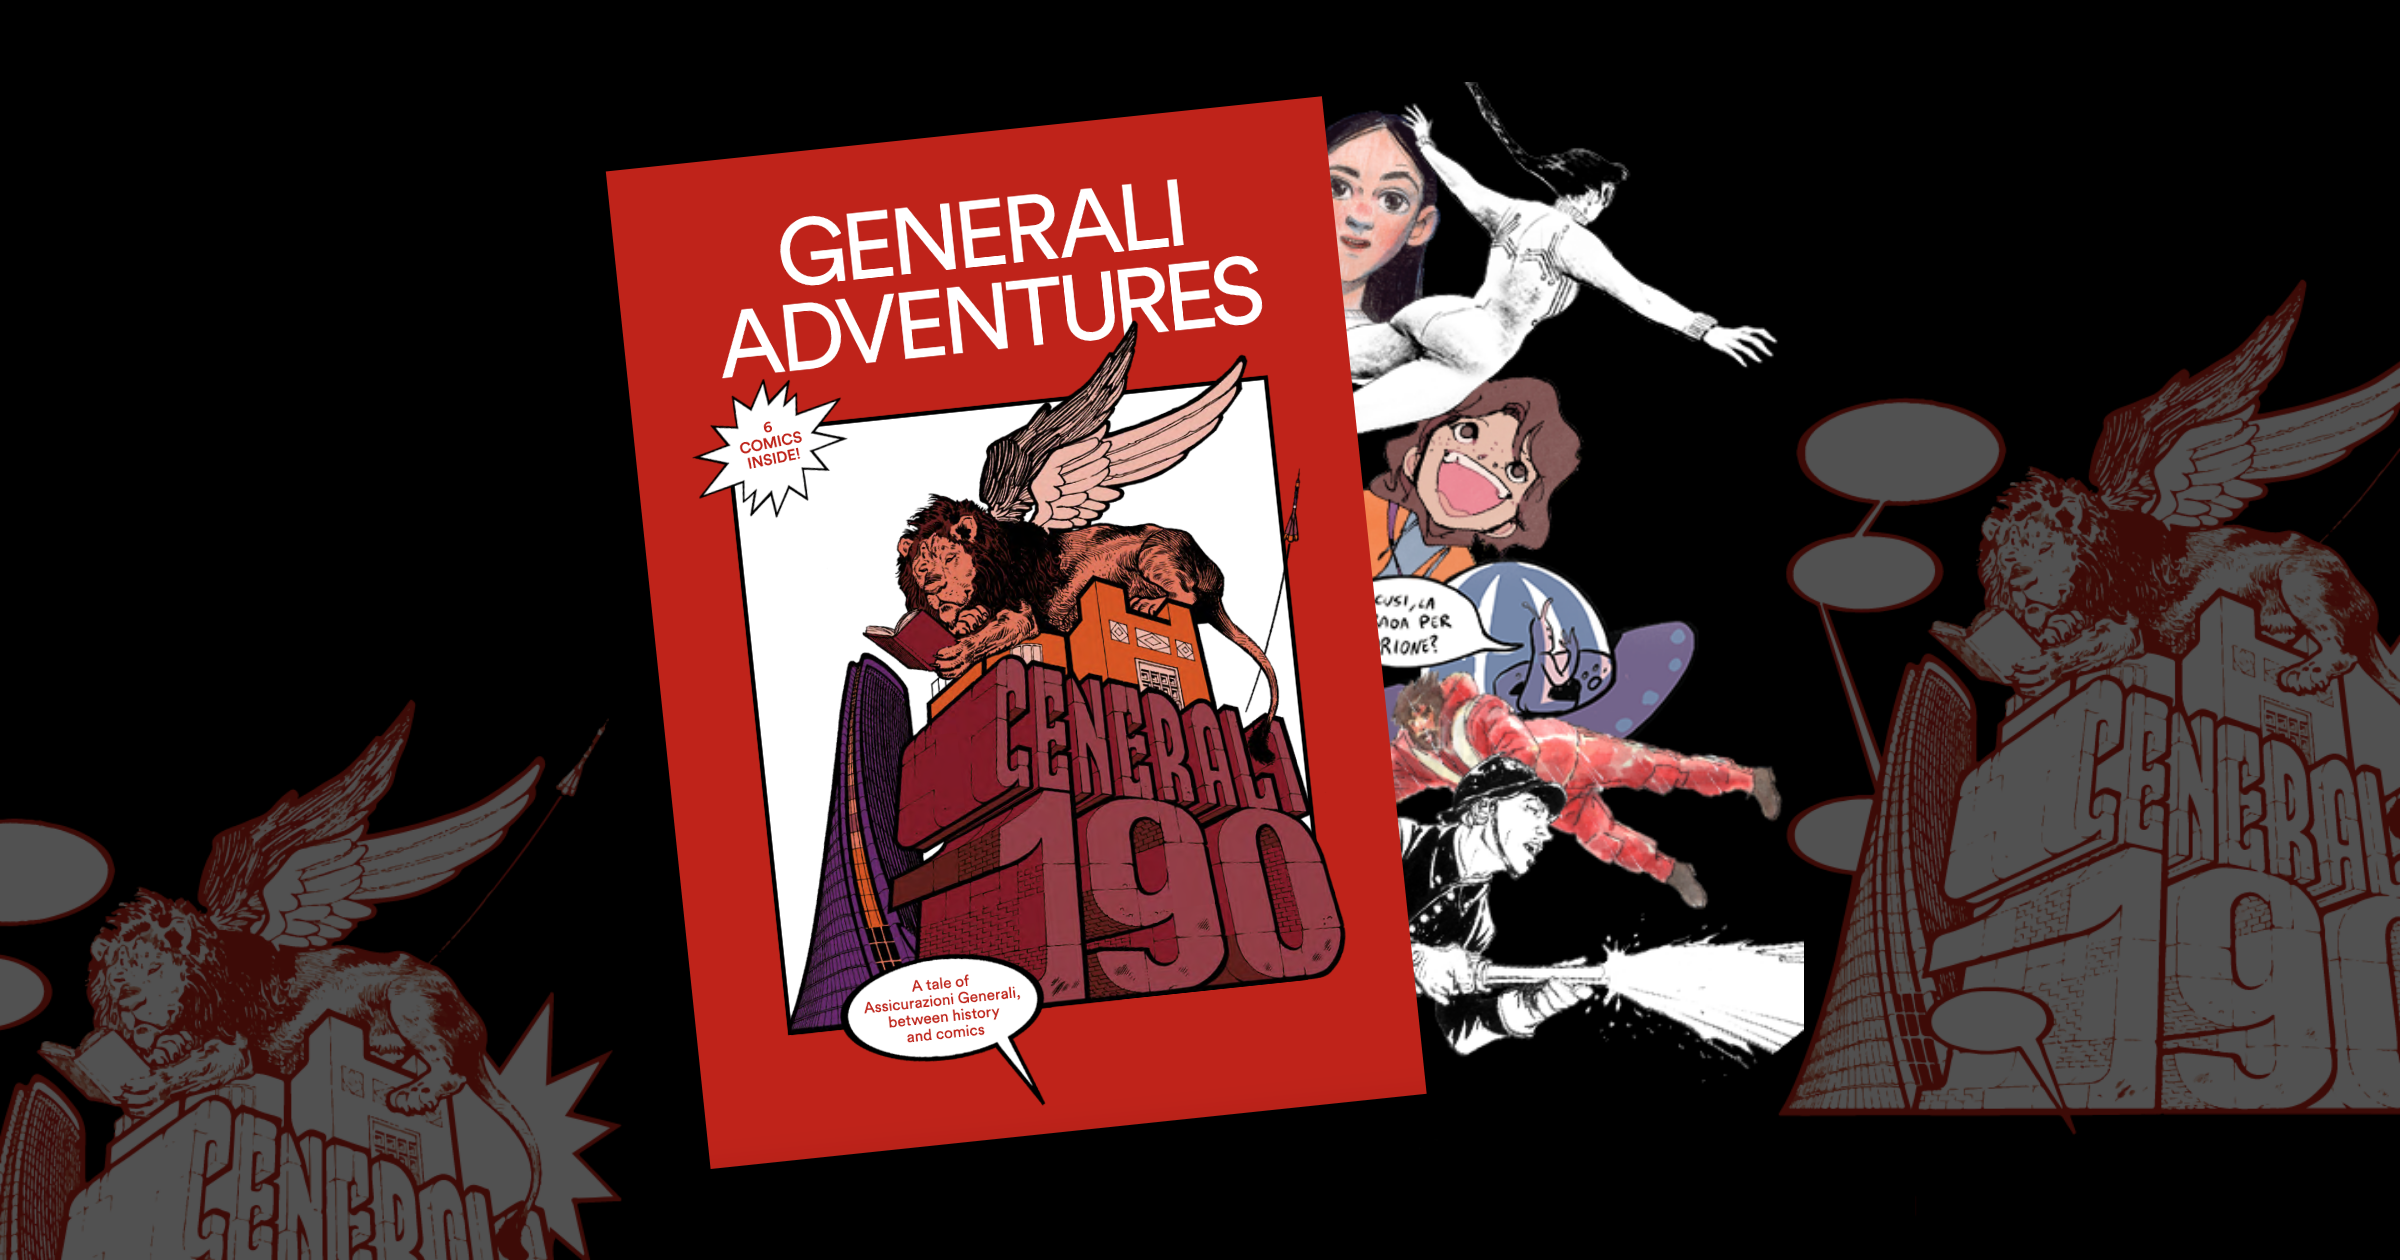 “Generali Adventures”: a tale of Assicurazioni Generali, between history and comics, presented at Salone Internazionale del Libro in Turin